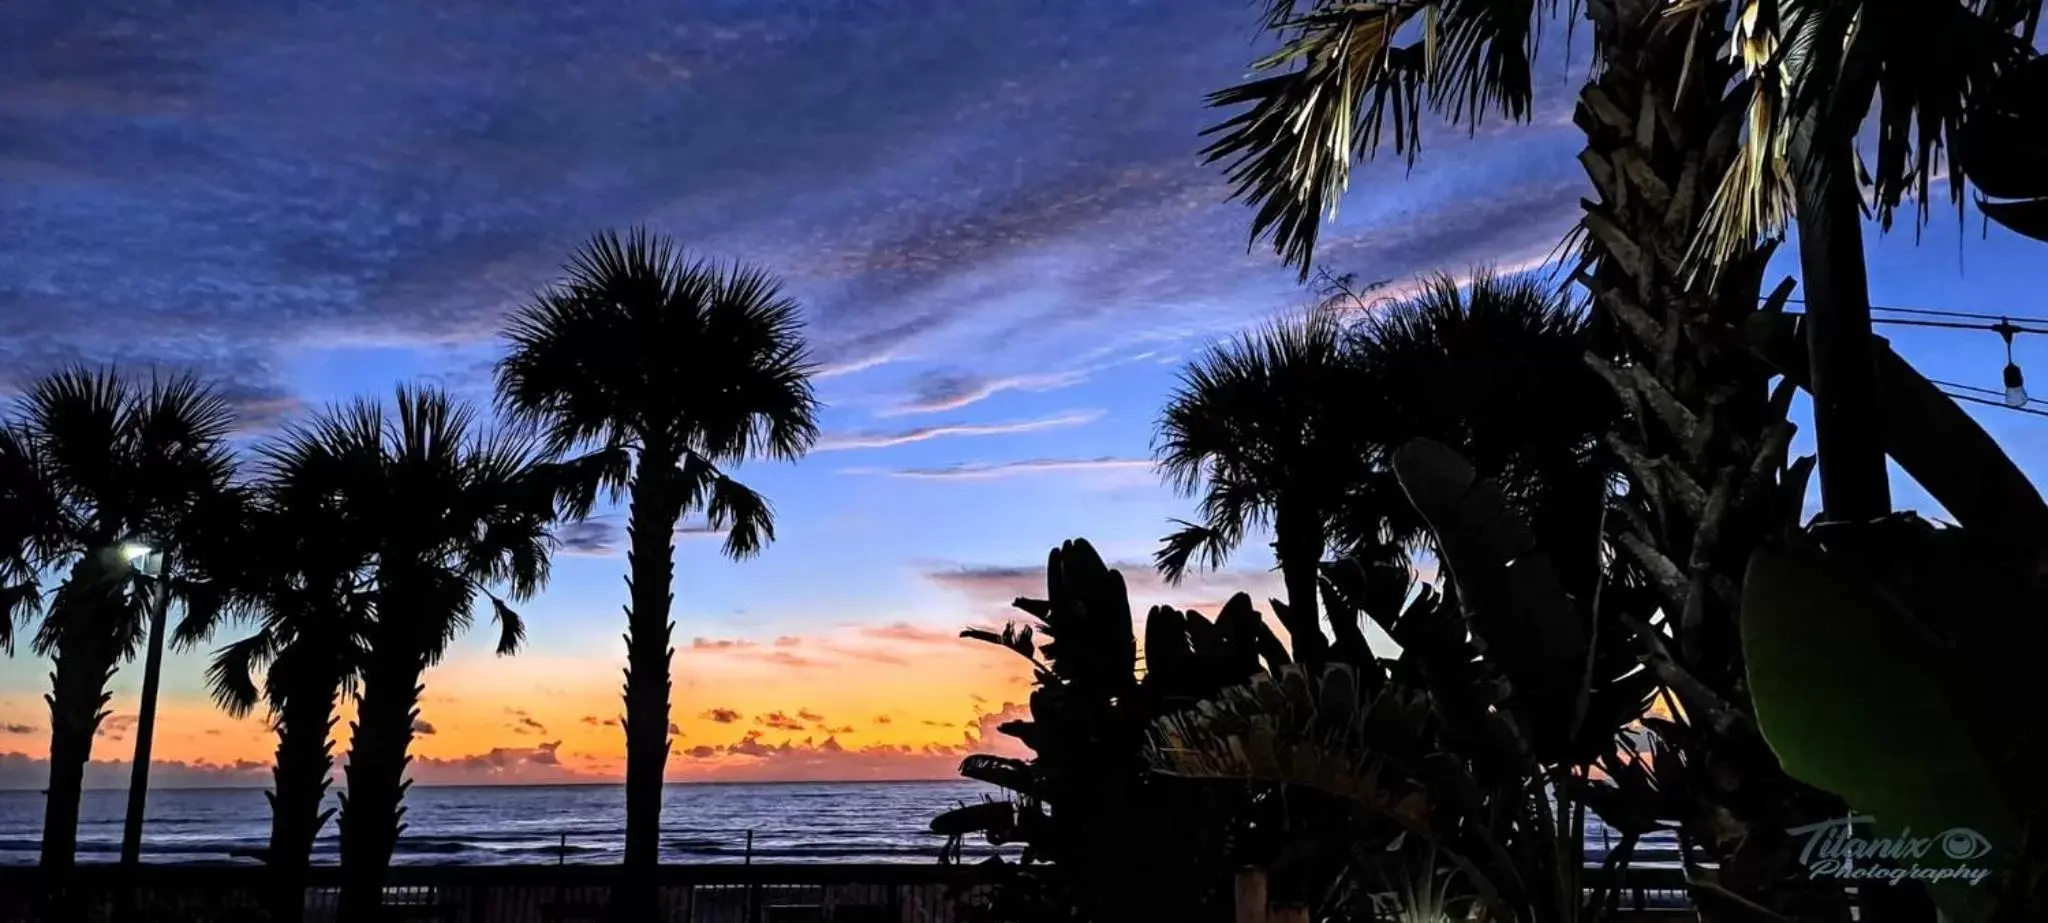 Sunrise in Fountain Beach Resort - Daytona Beach